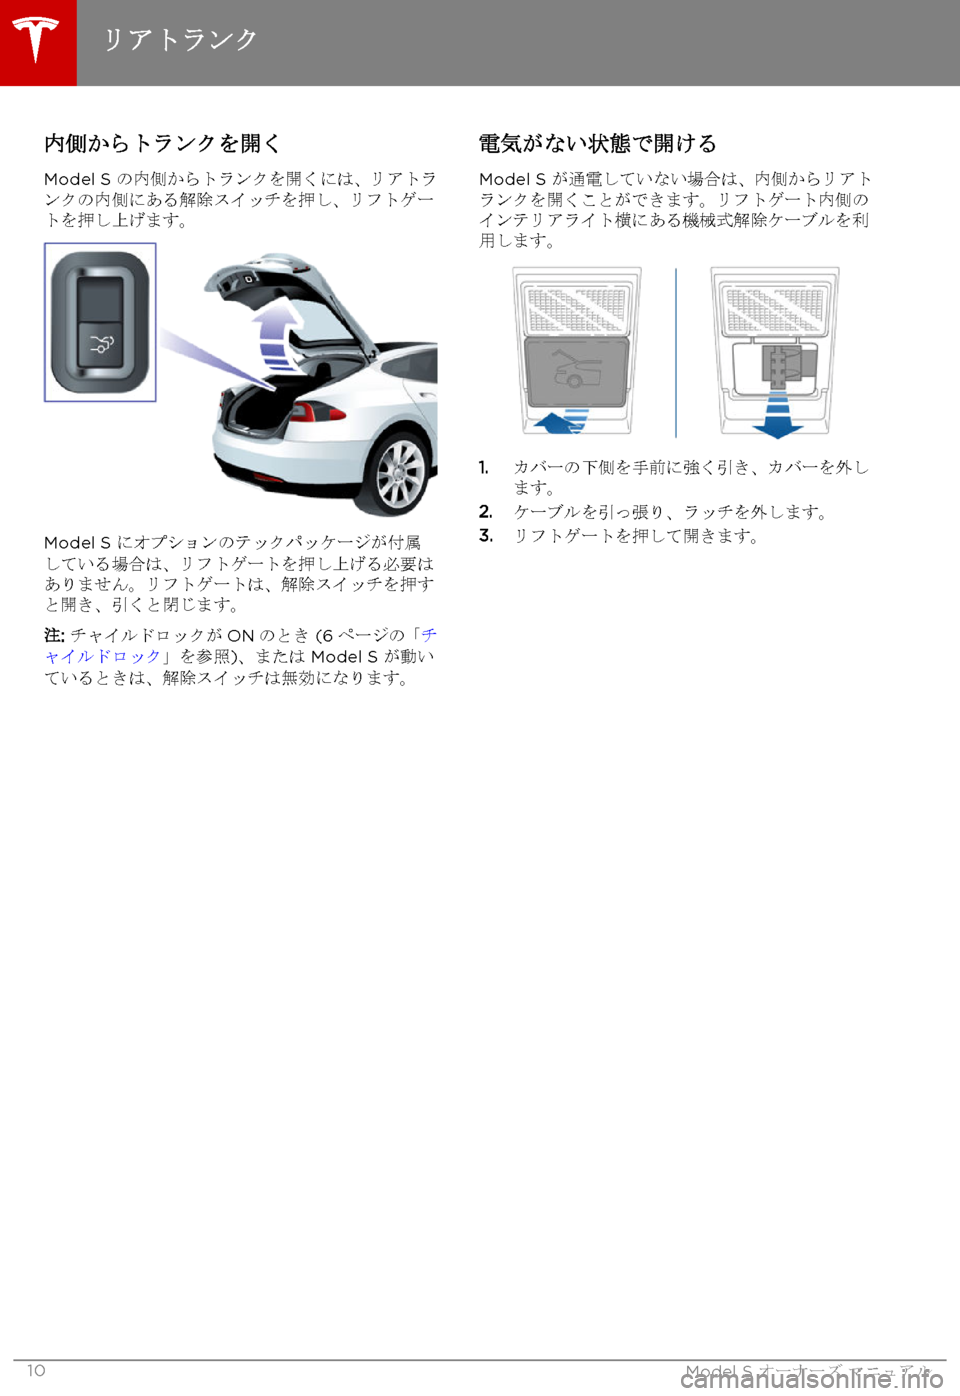 TESLA MODEL S 2015  取扱説明書 (in Japanese)  内側からトランクを開く
Model S の内側からトランクを開くには、リアトランクの内側にある解除スイッチを押し、リフトゲートを押し上げます。
Mode